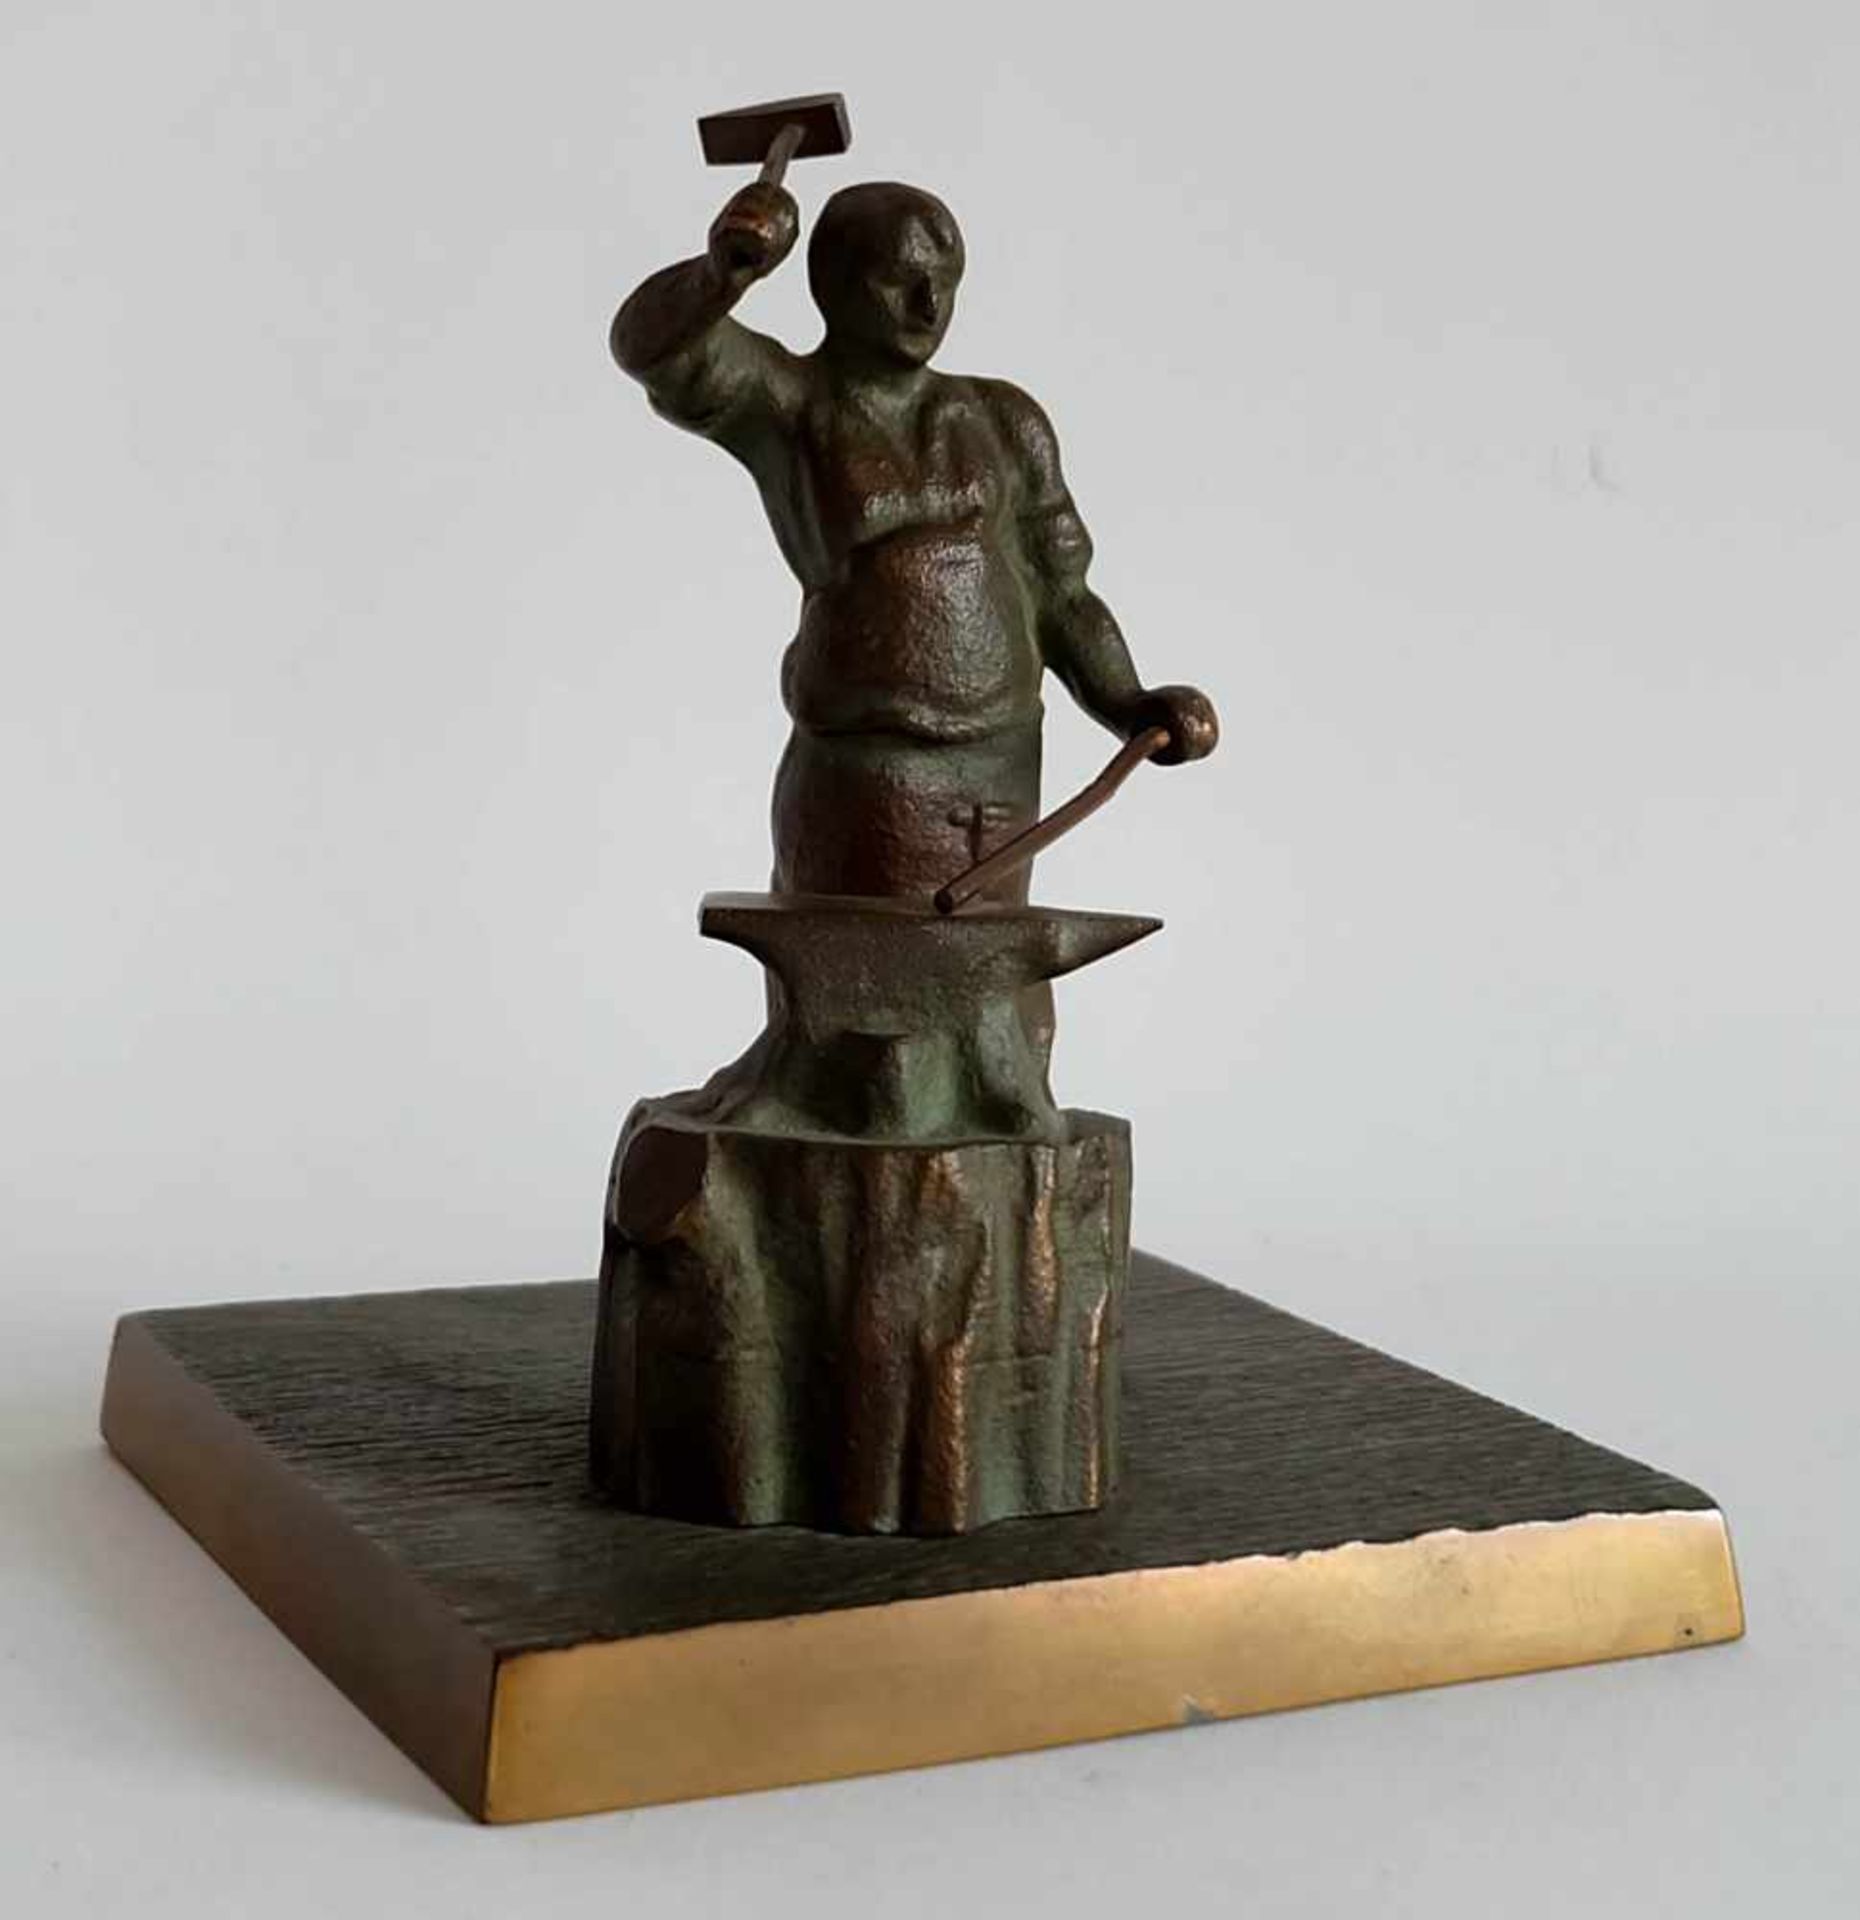 FIGUR, Bronze, dunkel patiniert, Schmied am Amboß, quadratische Plinthe, 16 x 13,5 x 13,5 cm